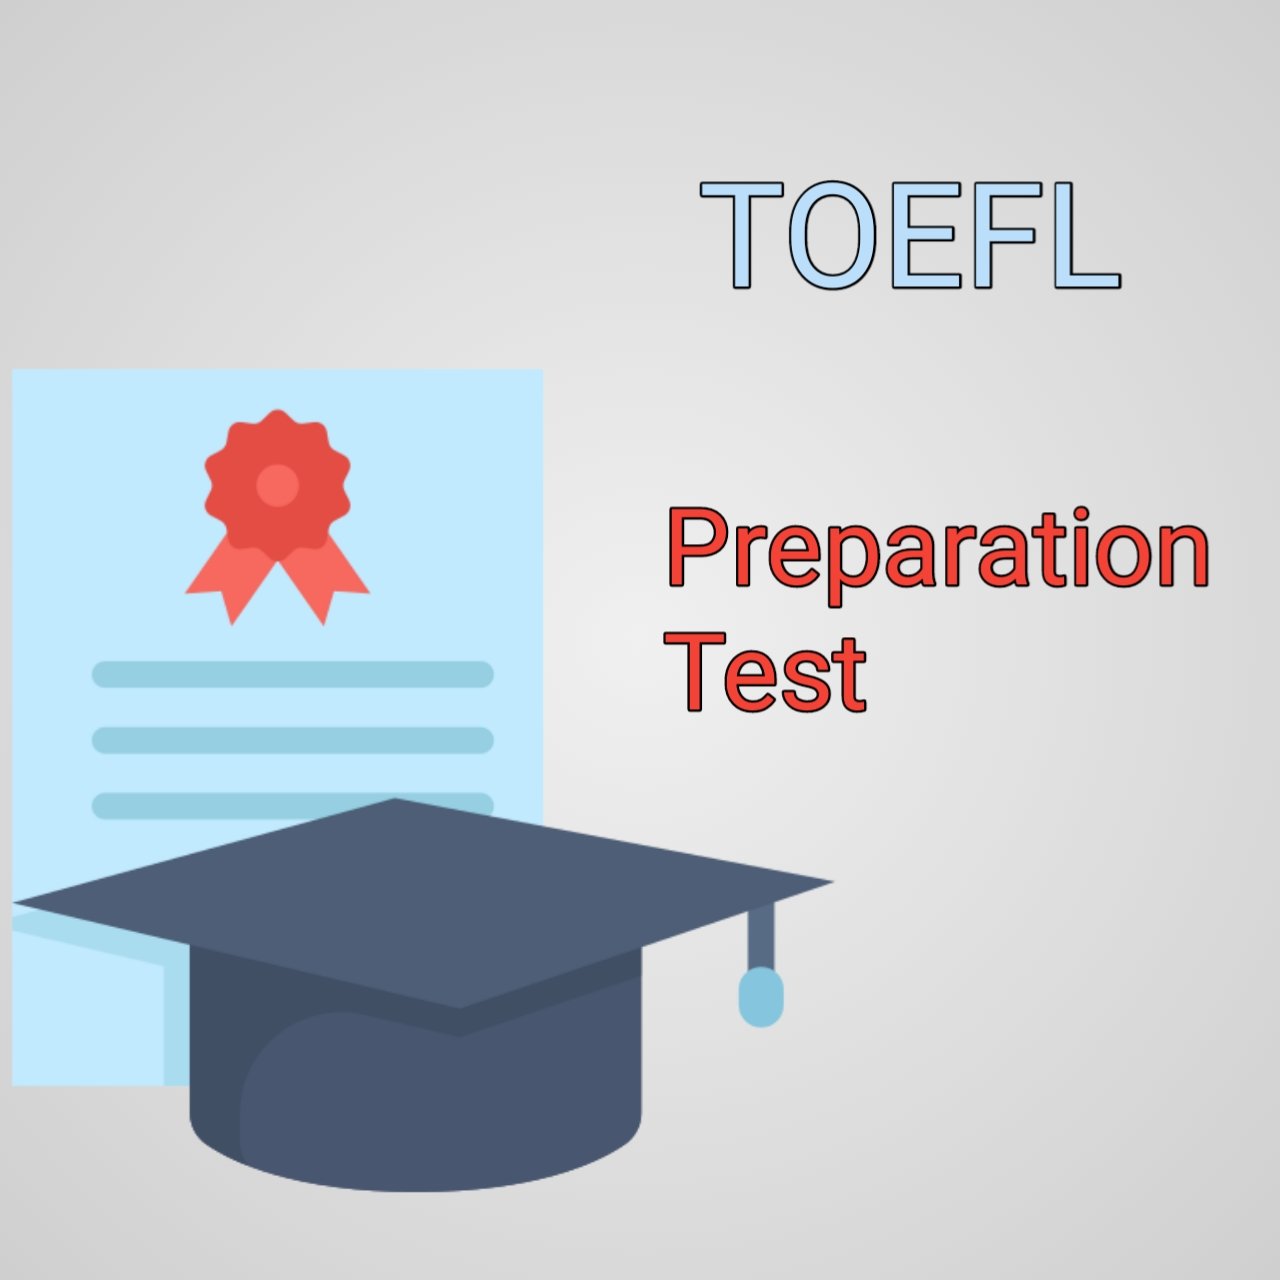 TOEFL preparation test